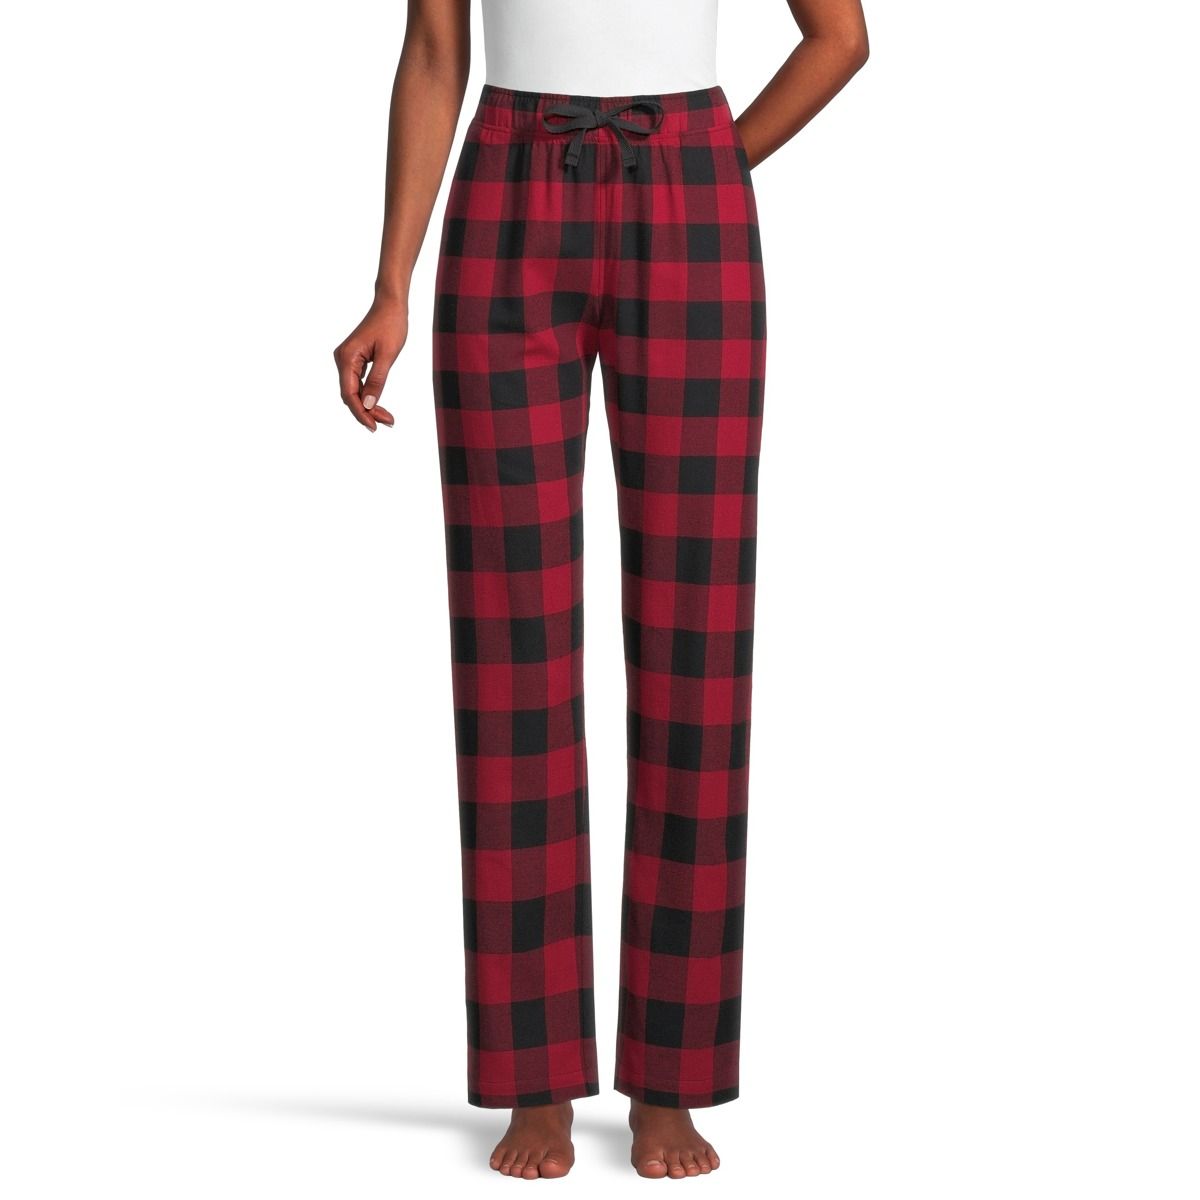 5-Pack: Womens Comfy Laced Hem Lounge Sleep Pajama Shorts